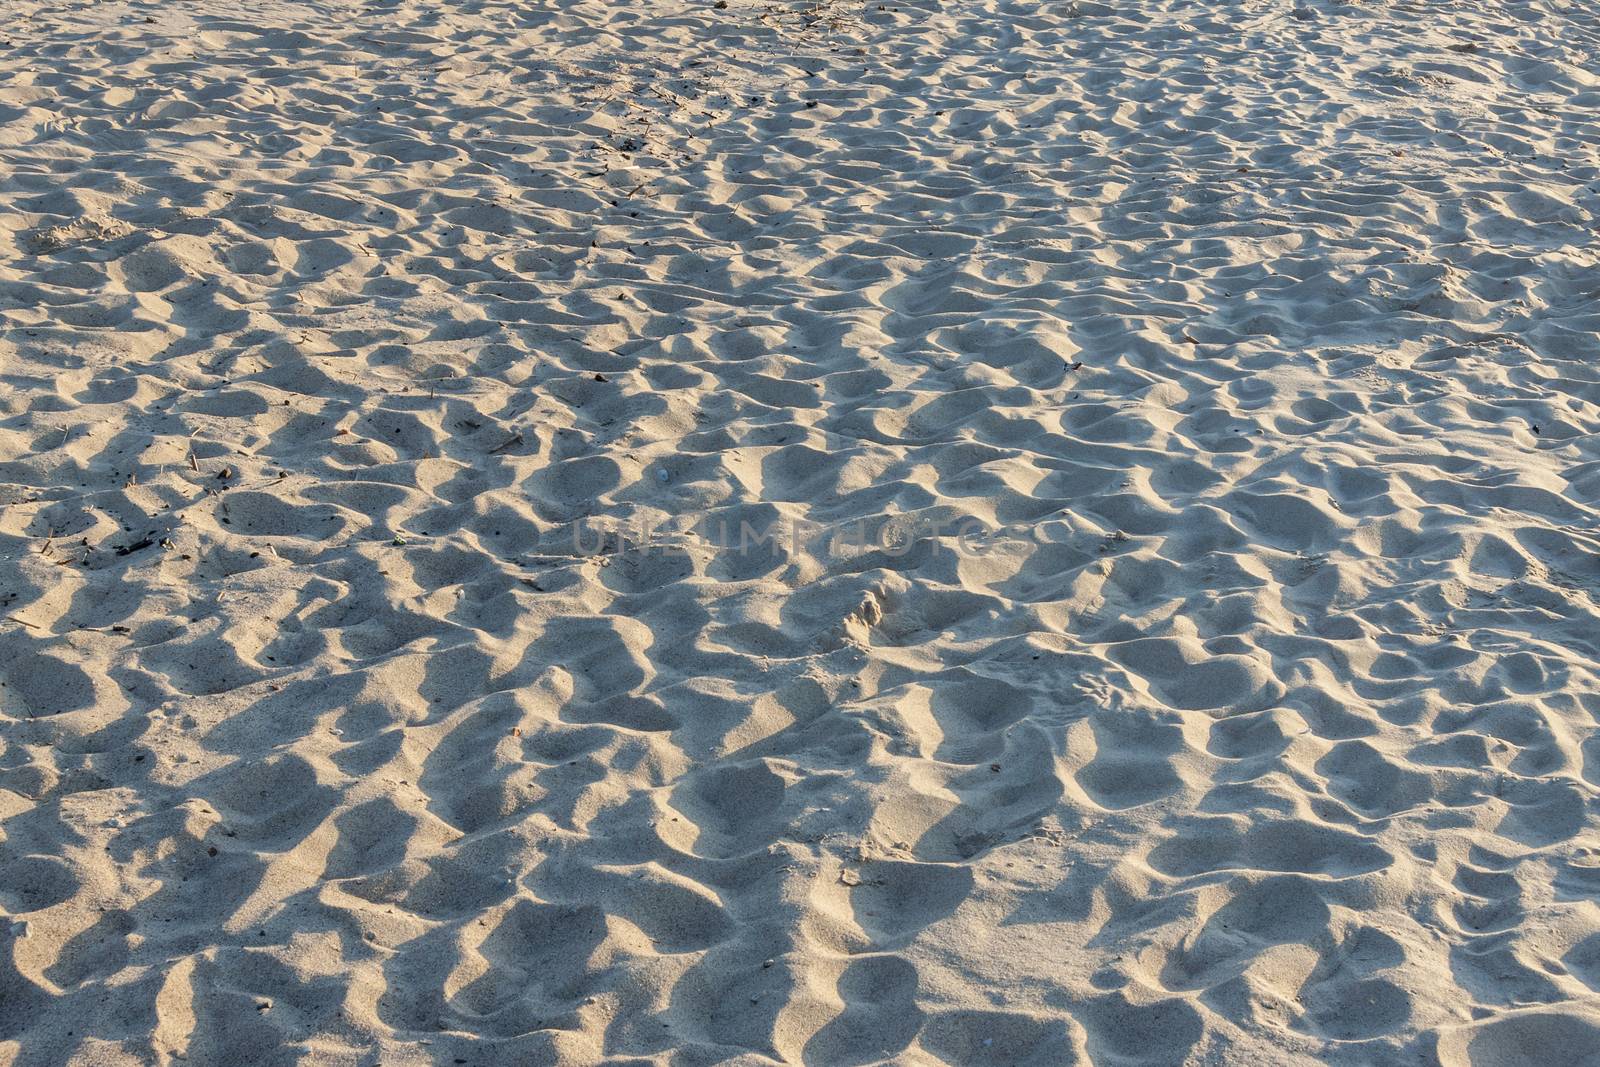 Sand on the beach - background.